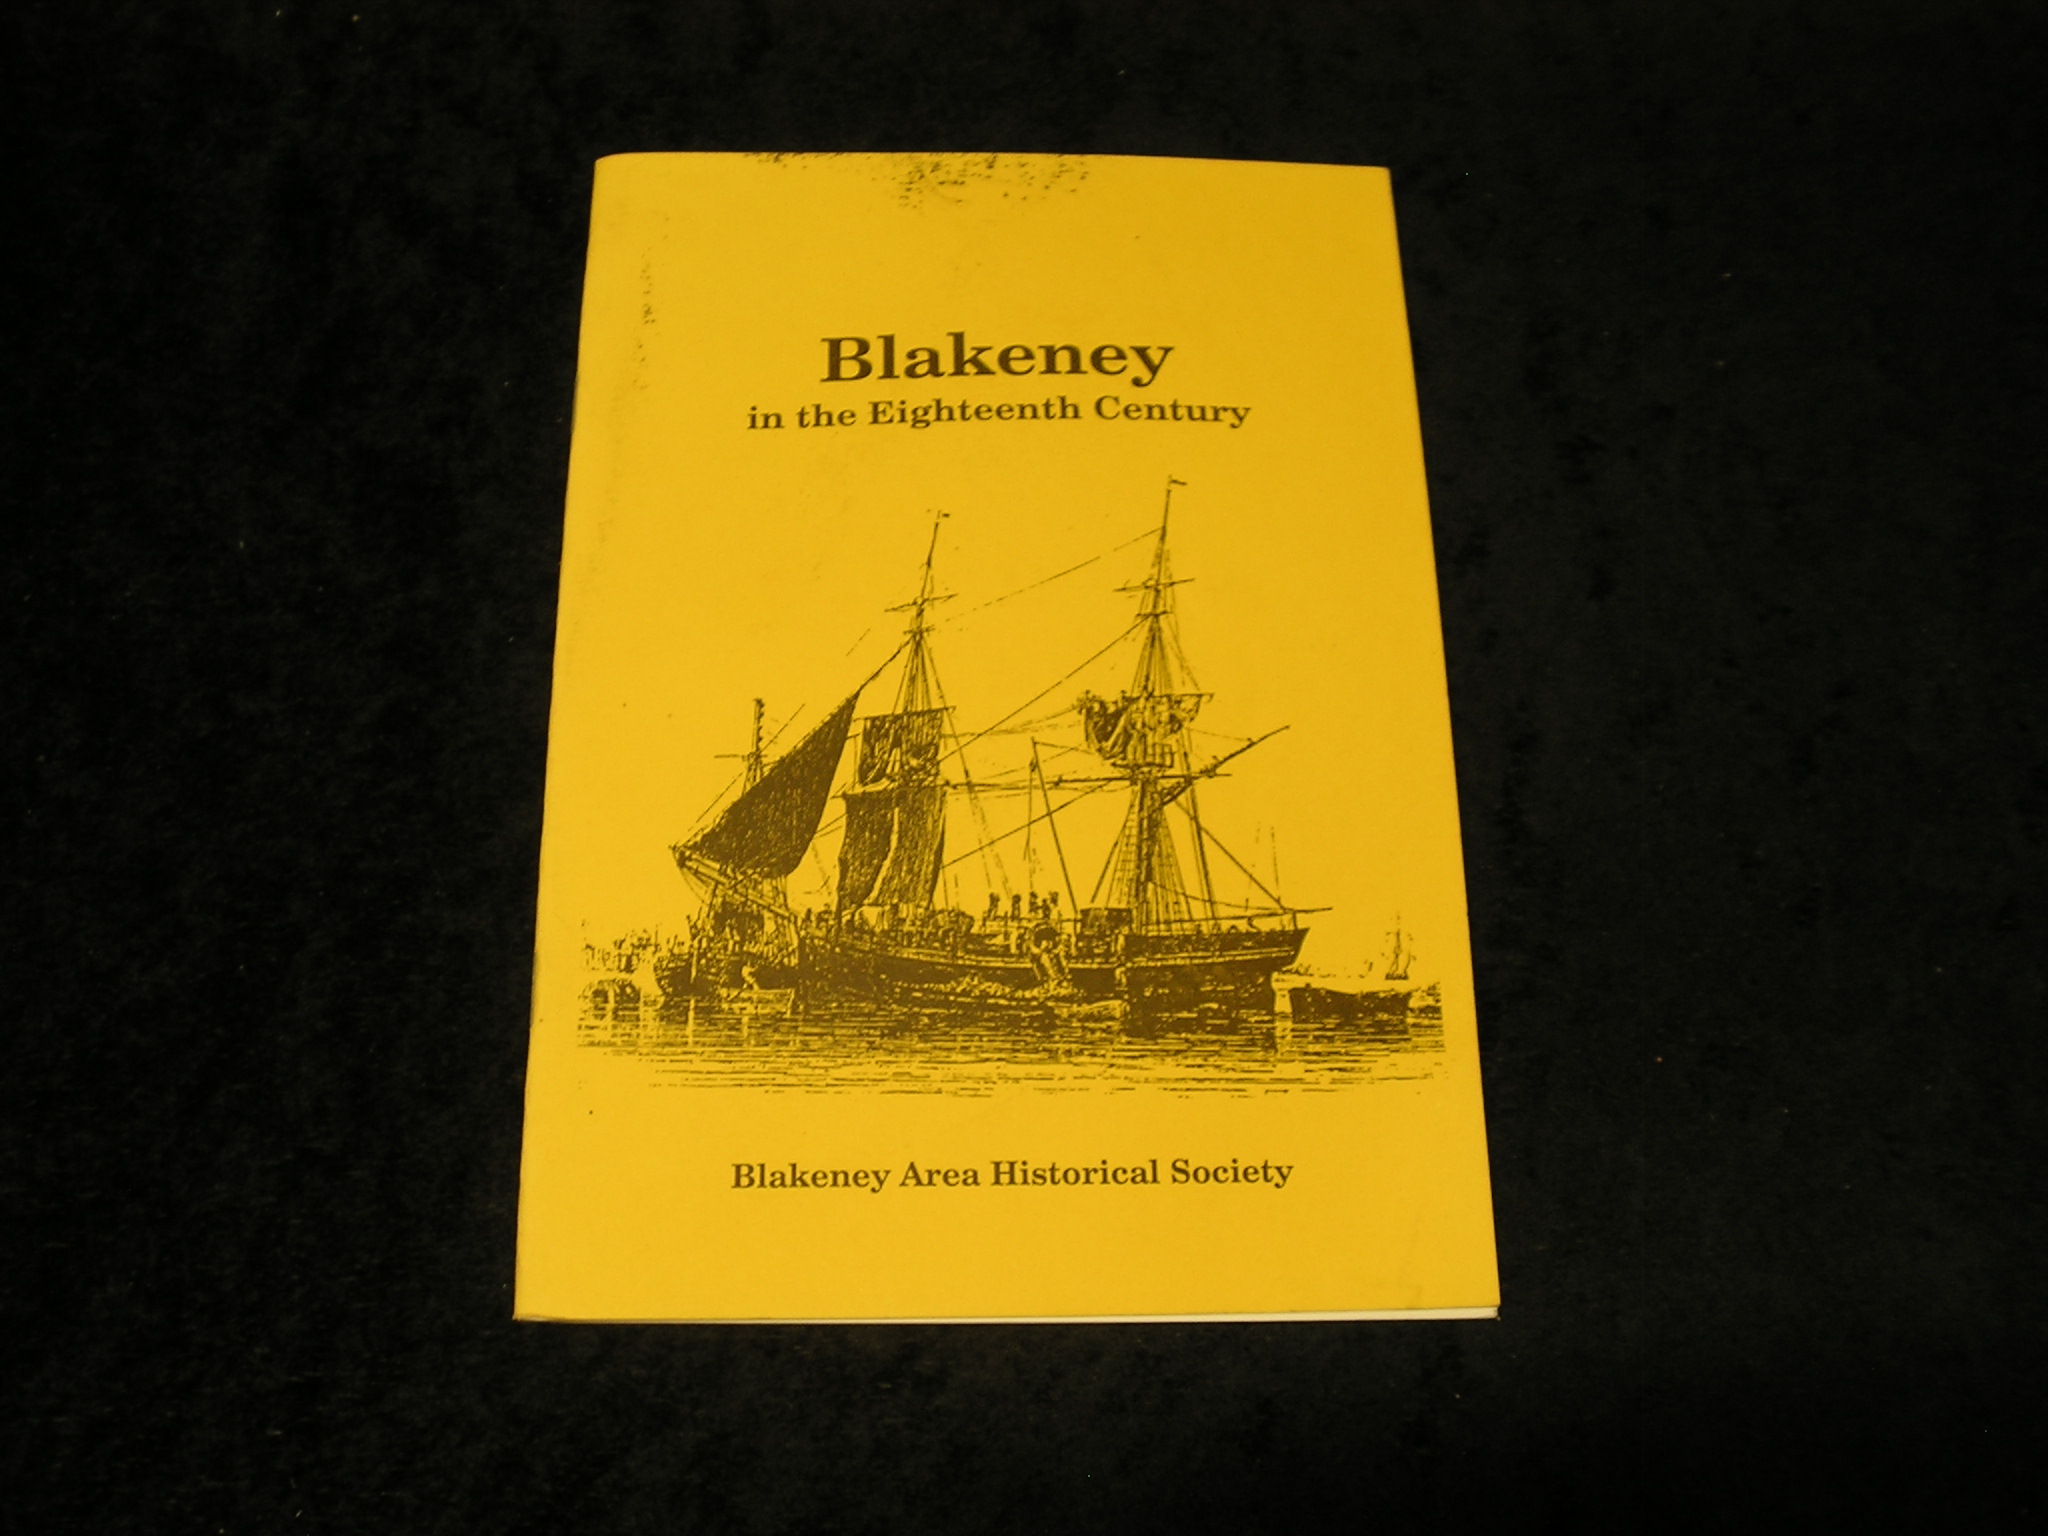 Blakeney in the Eighteenth Century